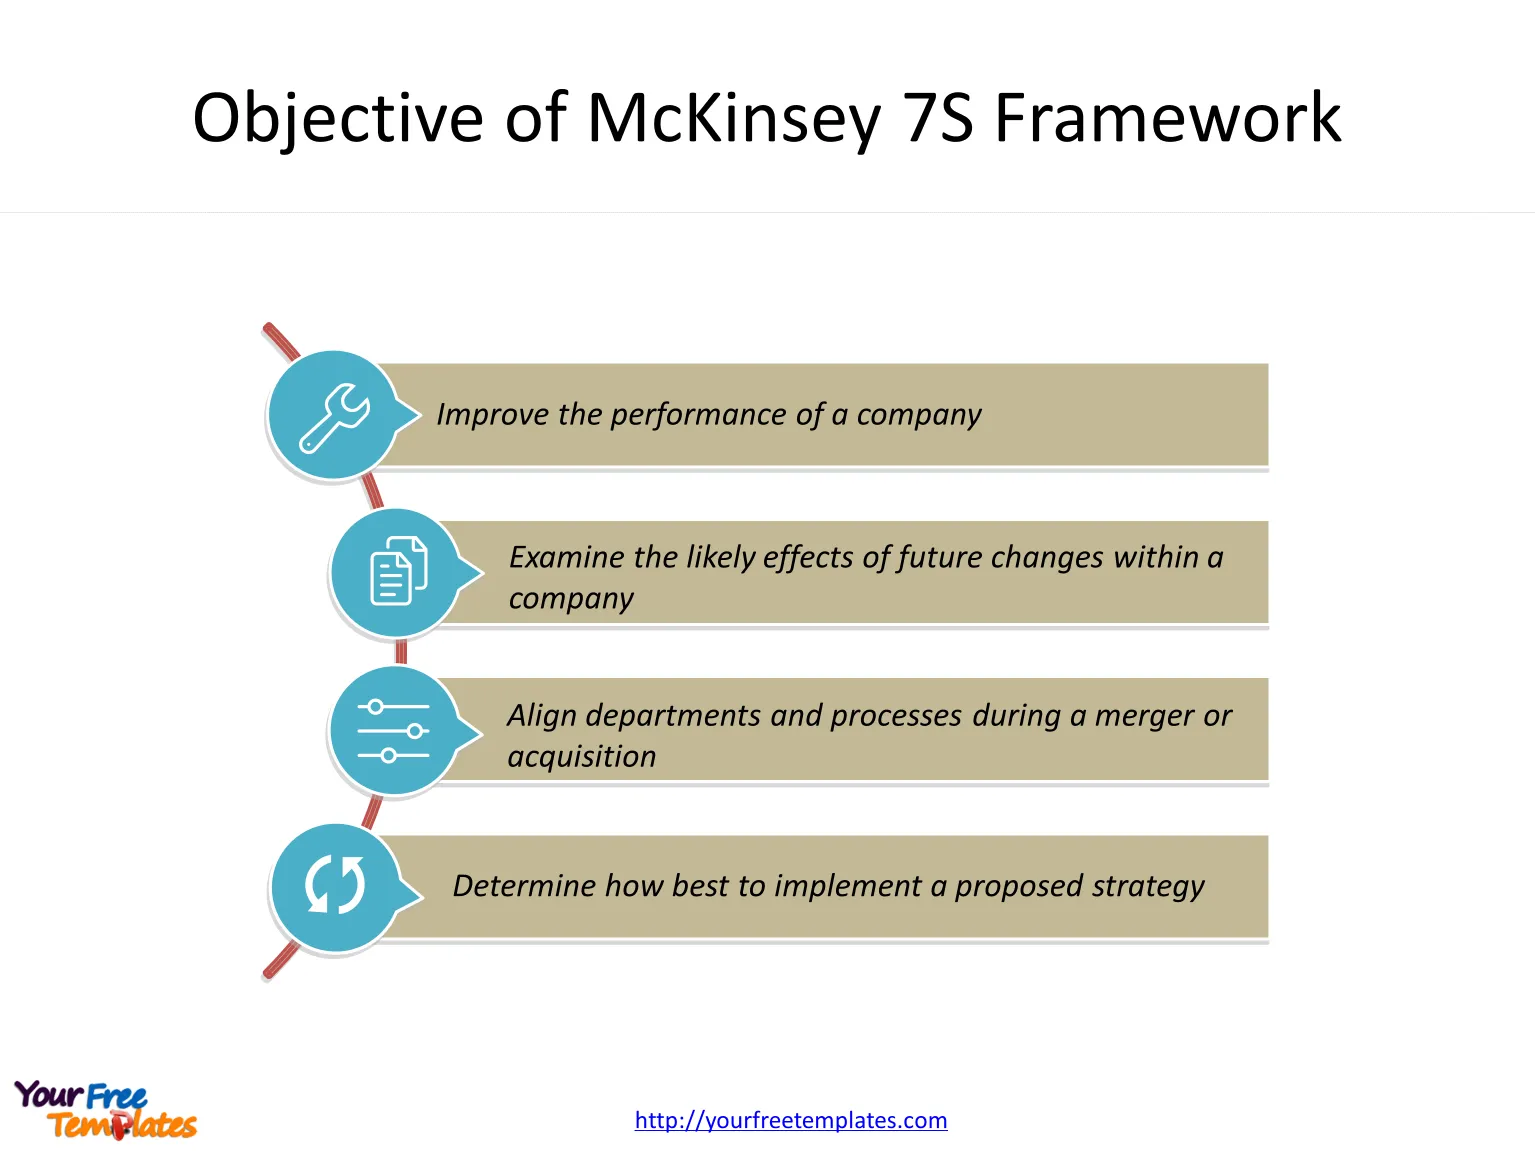 McKinsey 7S Framework diagram